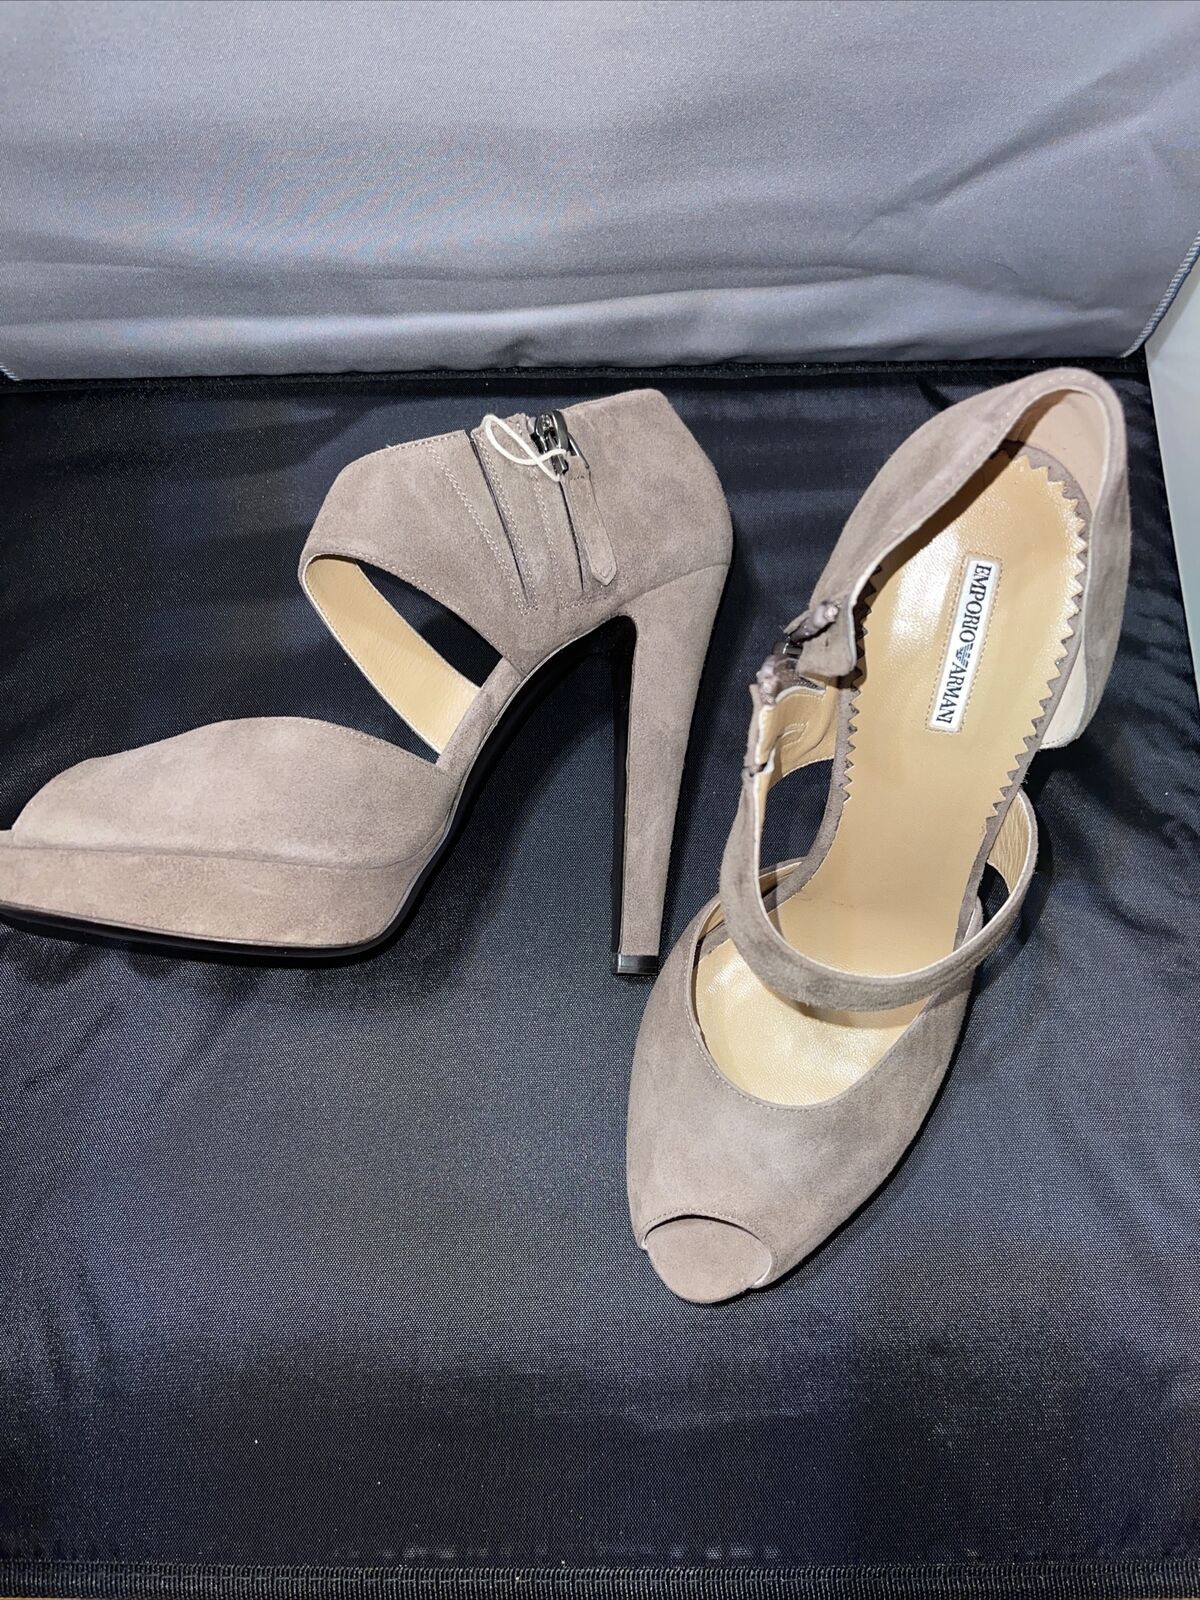 EMPORIO ARMANI Platform Taupe Soft Suede Sandals NWOT Never Worn Sz 38 $695  | eBay